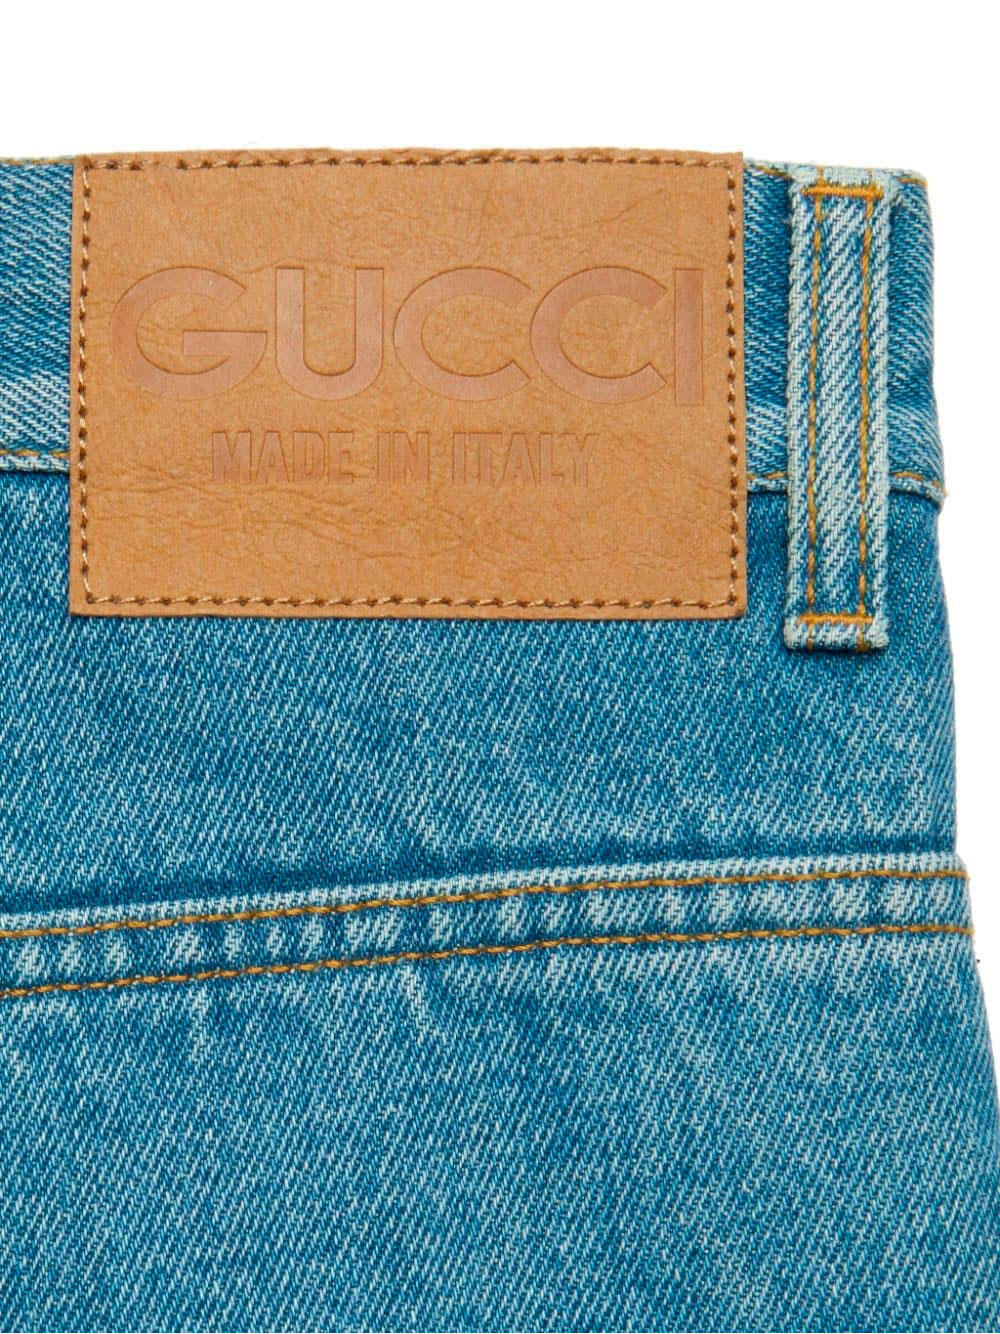 Horsebit-detail jeans